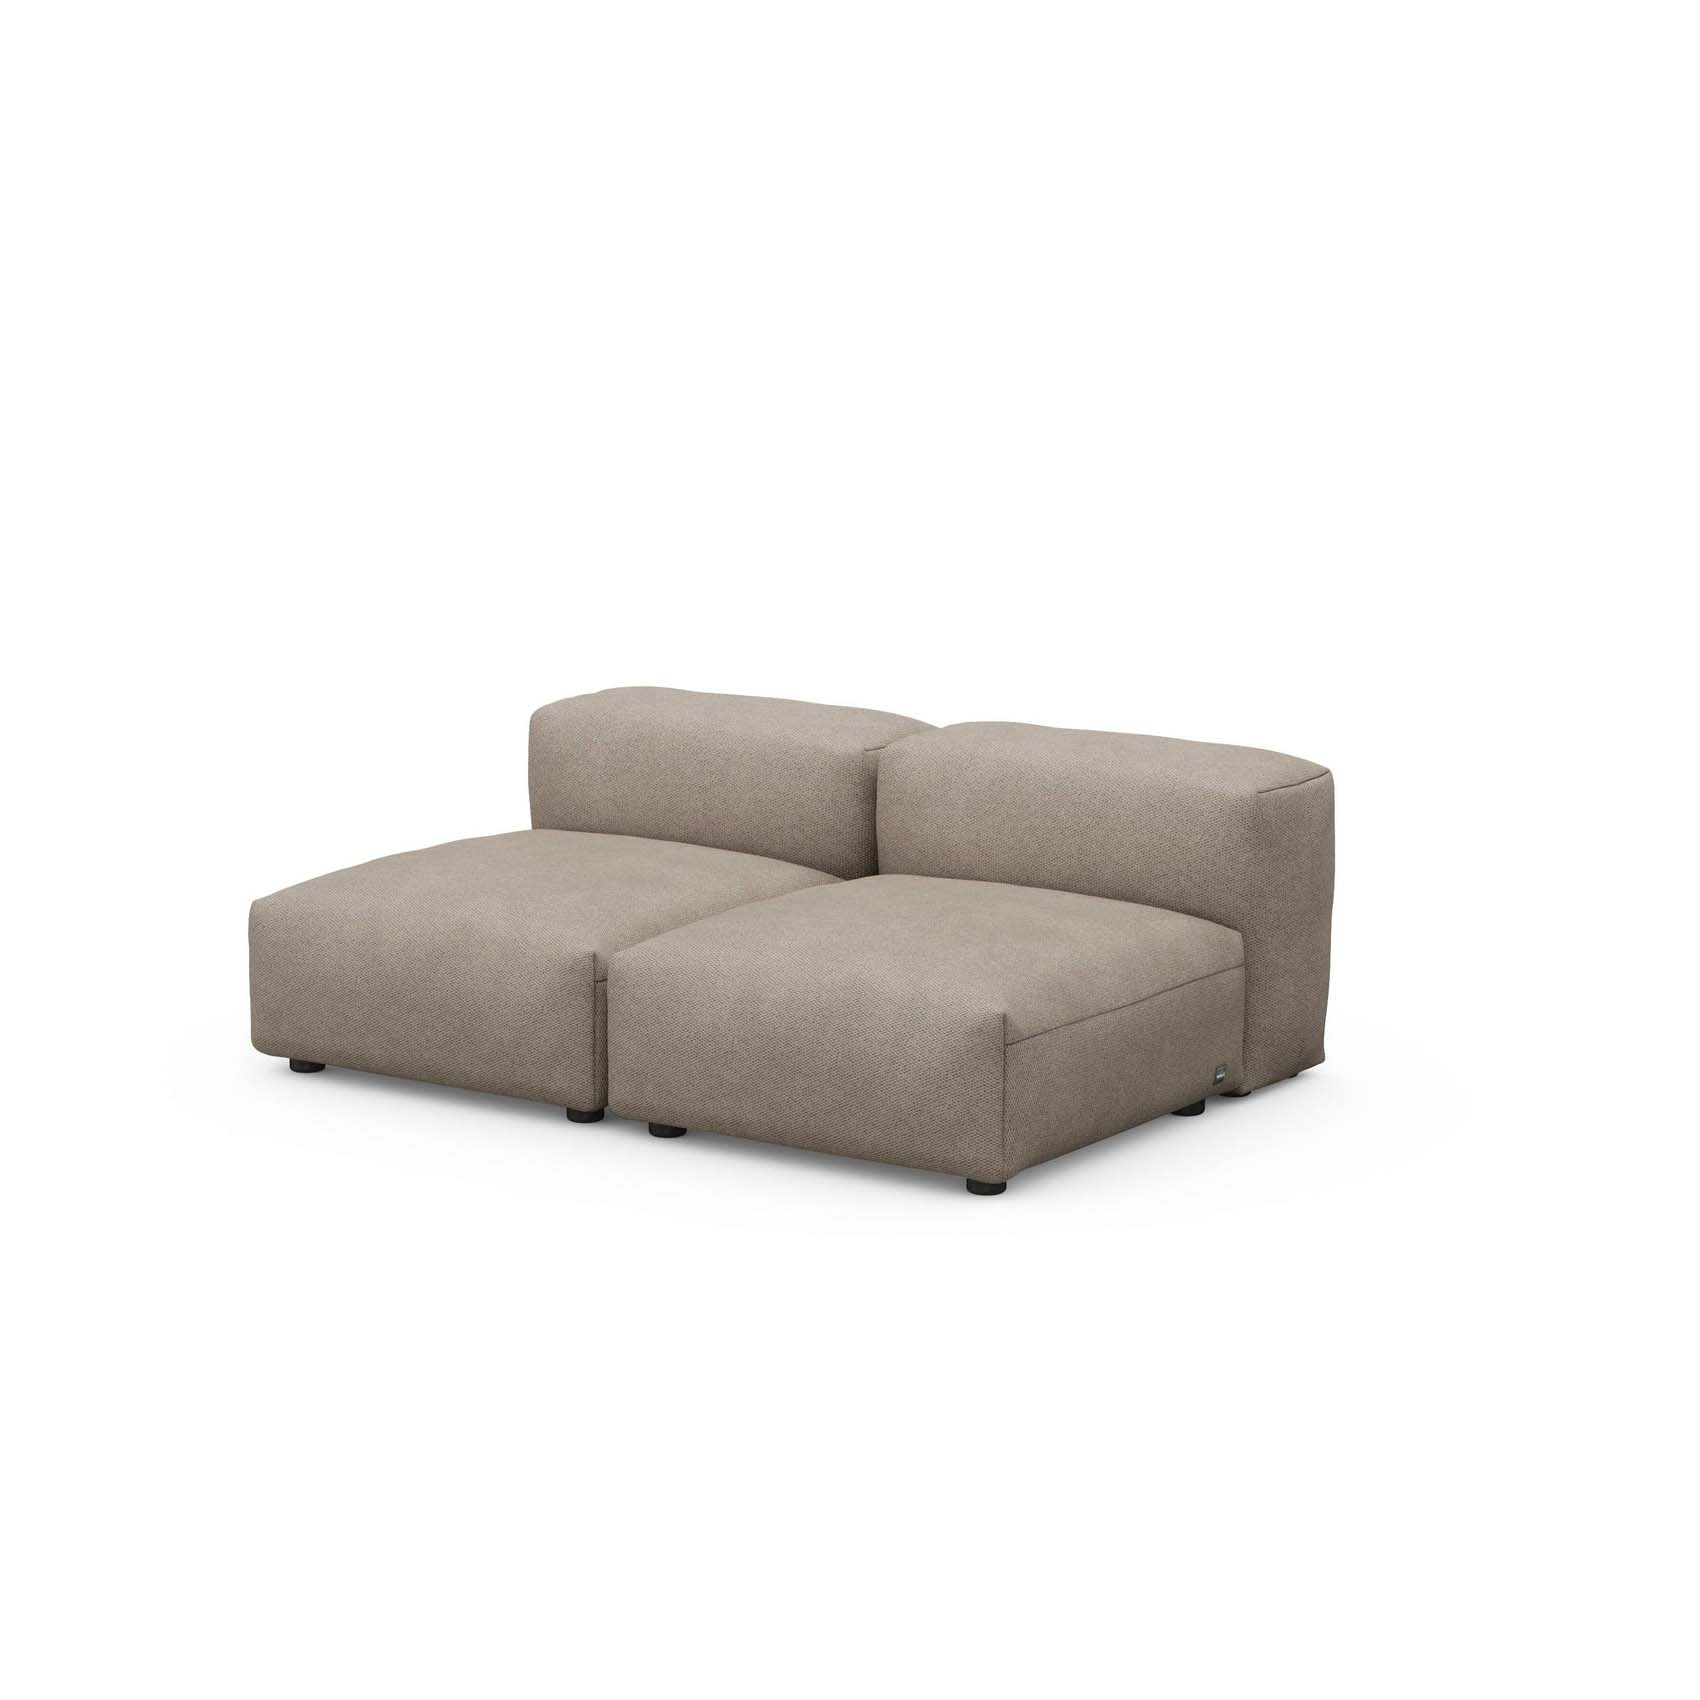 Two Seat Lounge Sofa S Pique Stone